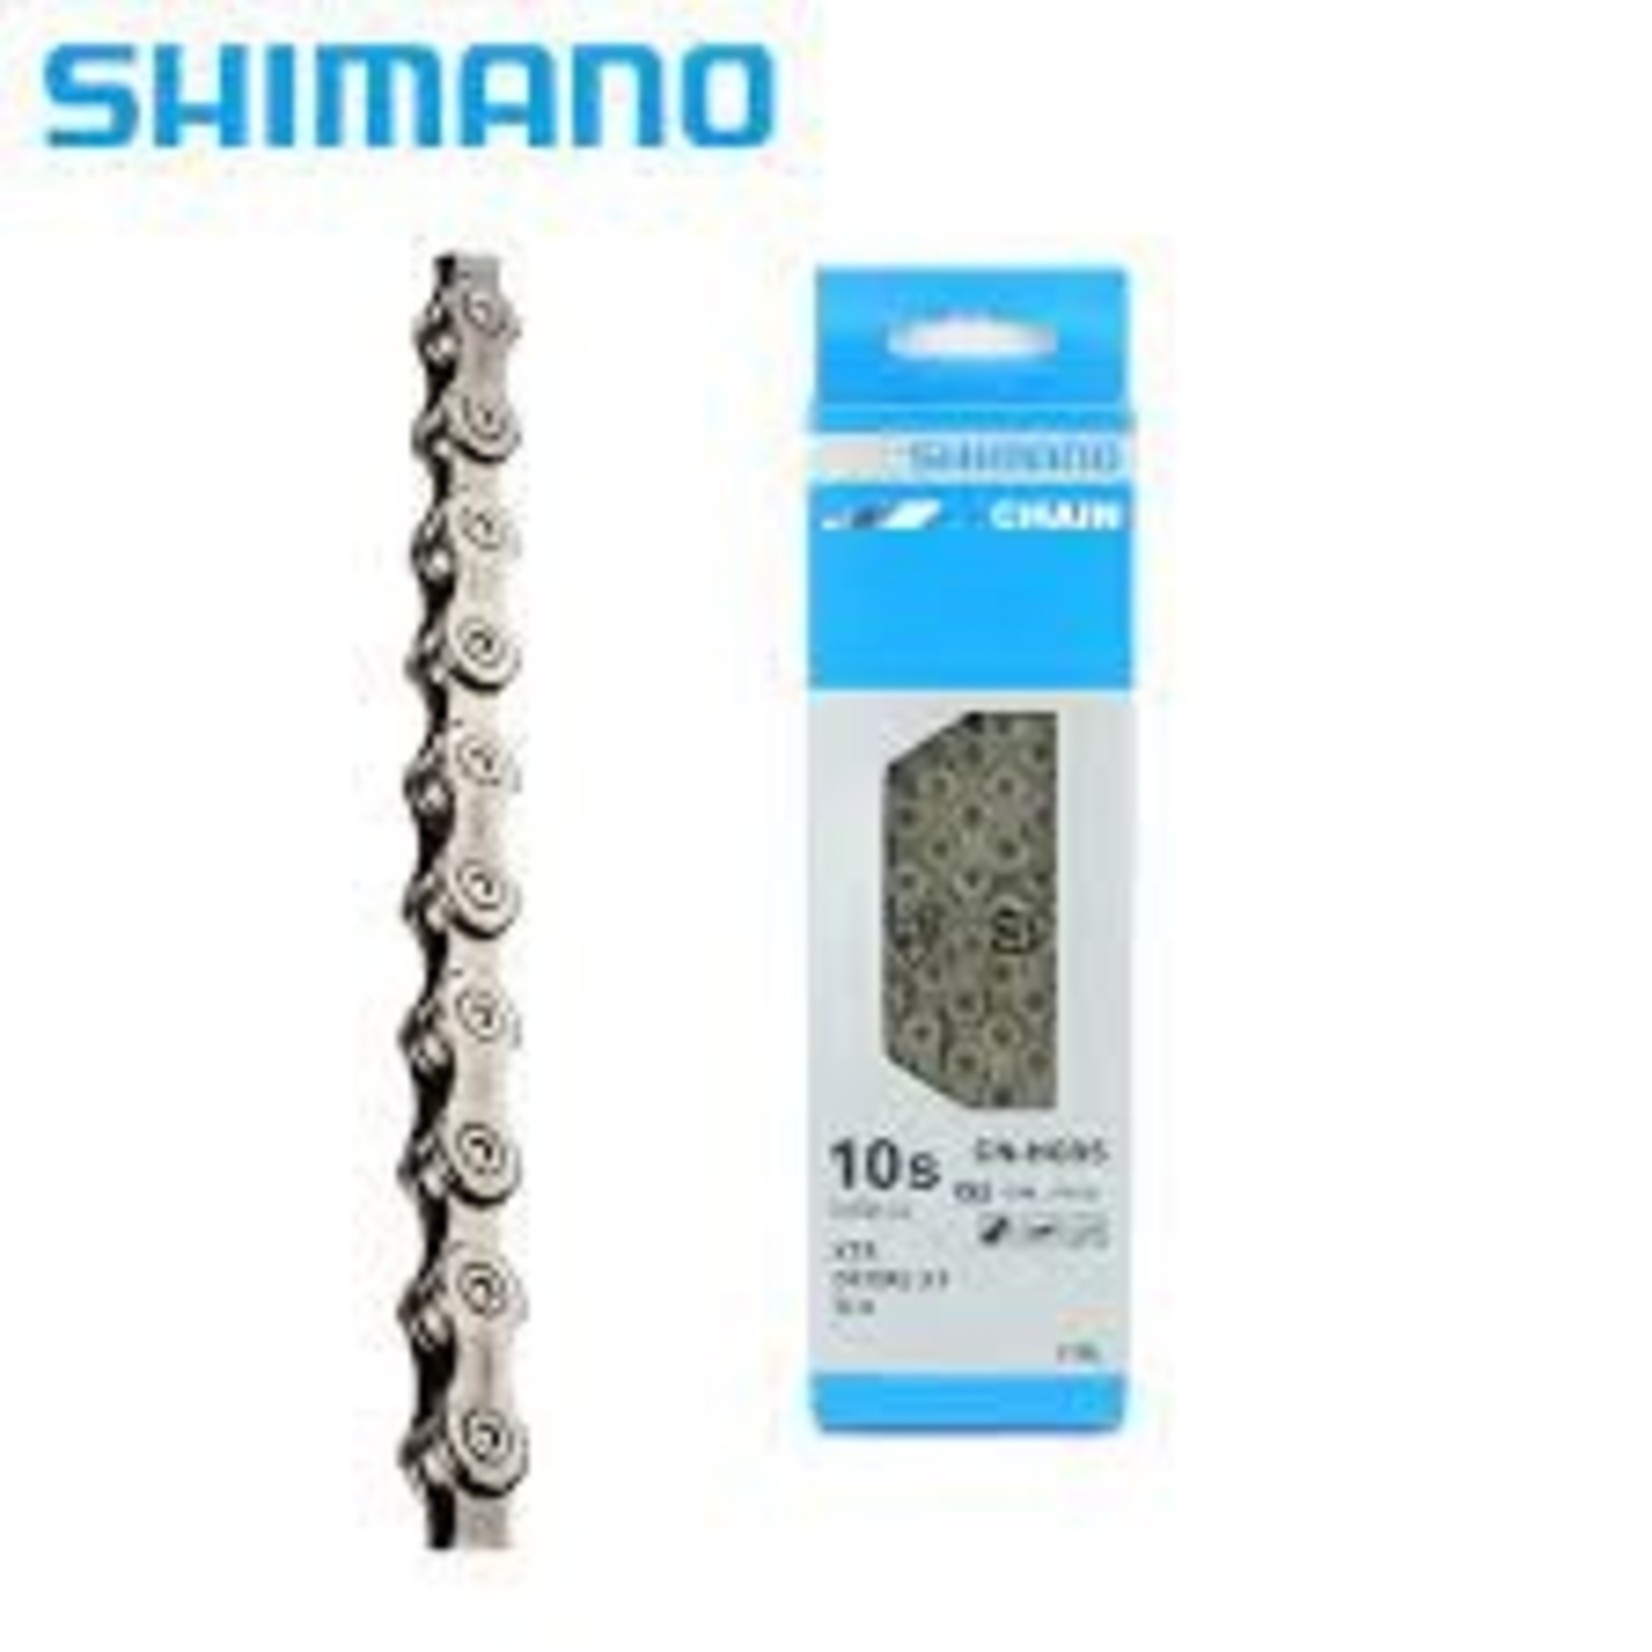 Shimano Shimano Deore XT / XTR / SLX 10 speed Chain 116L Silver